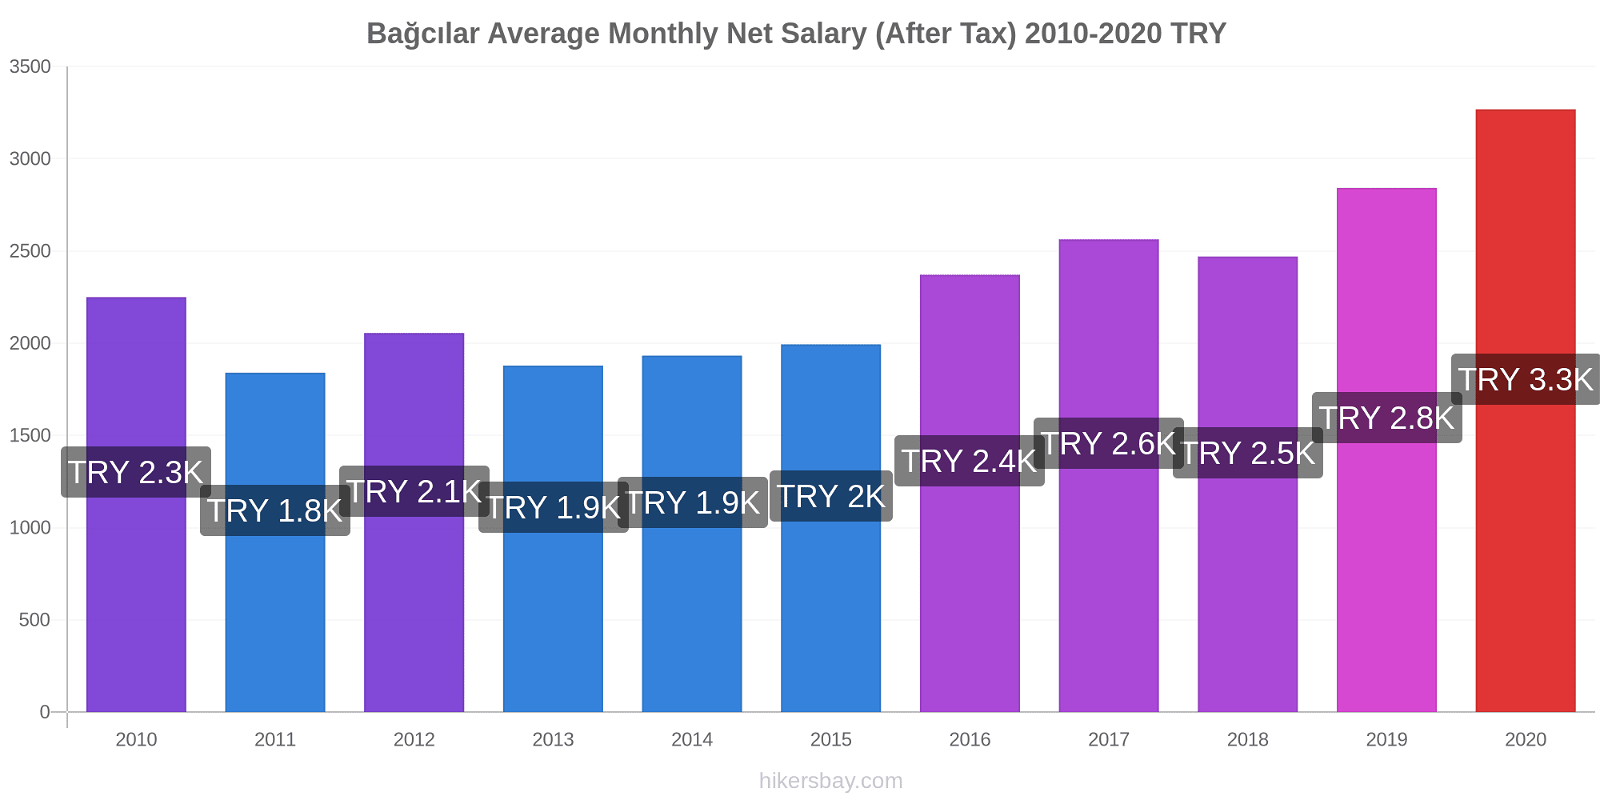 Bağcılar price changes Average Monthly Net Salary (After Tax) hikersbay.com